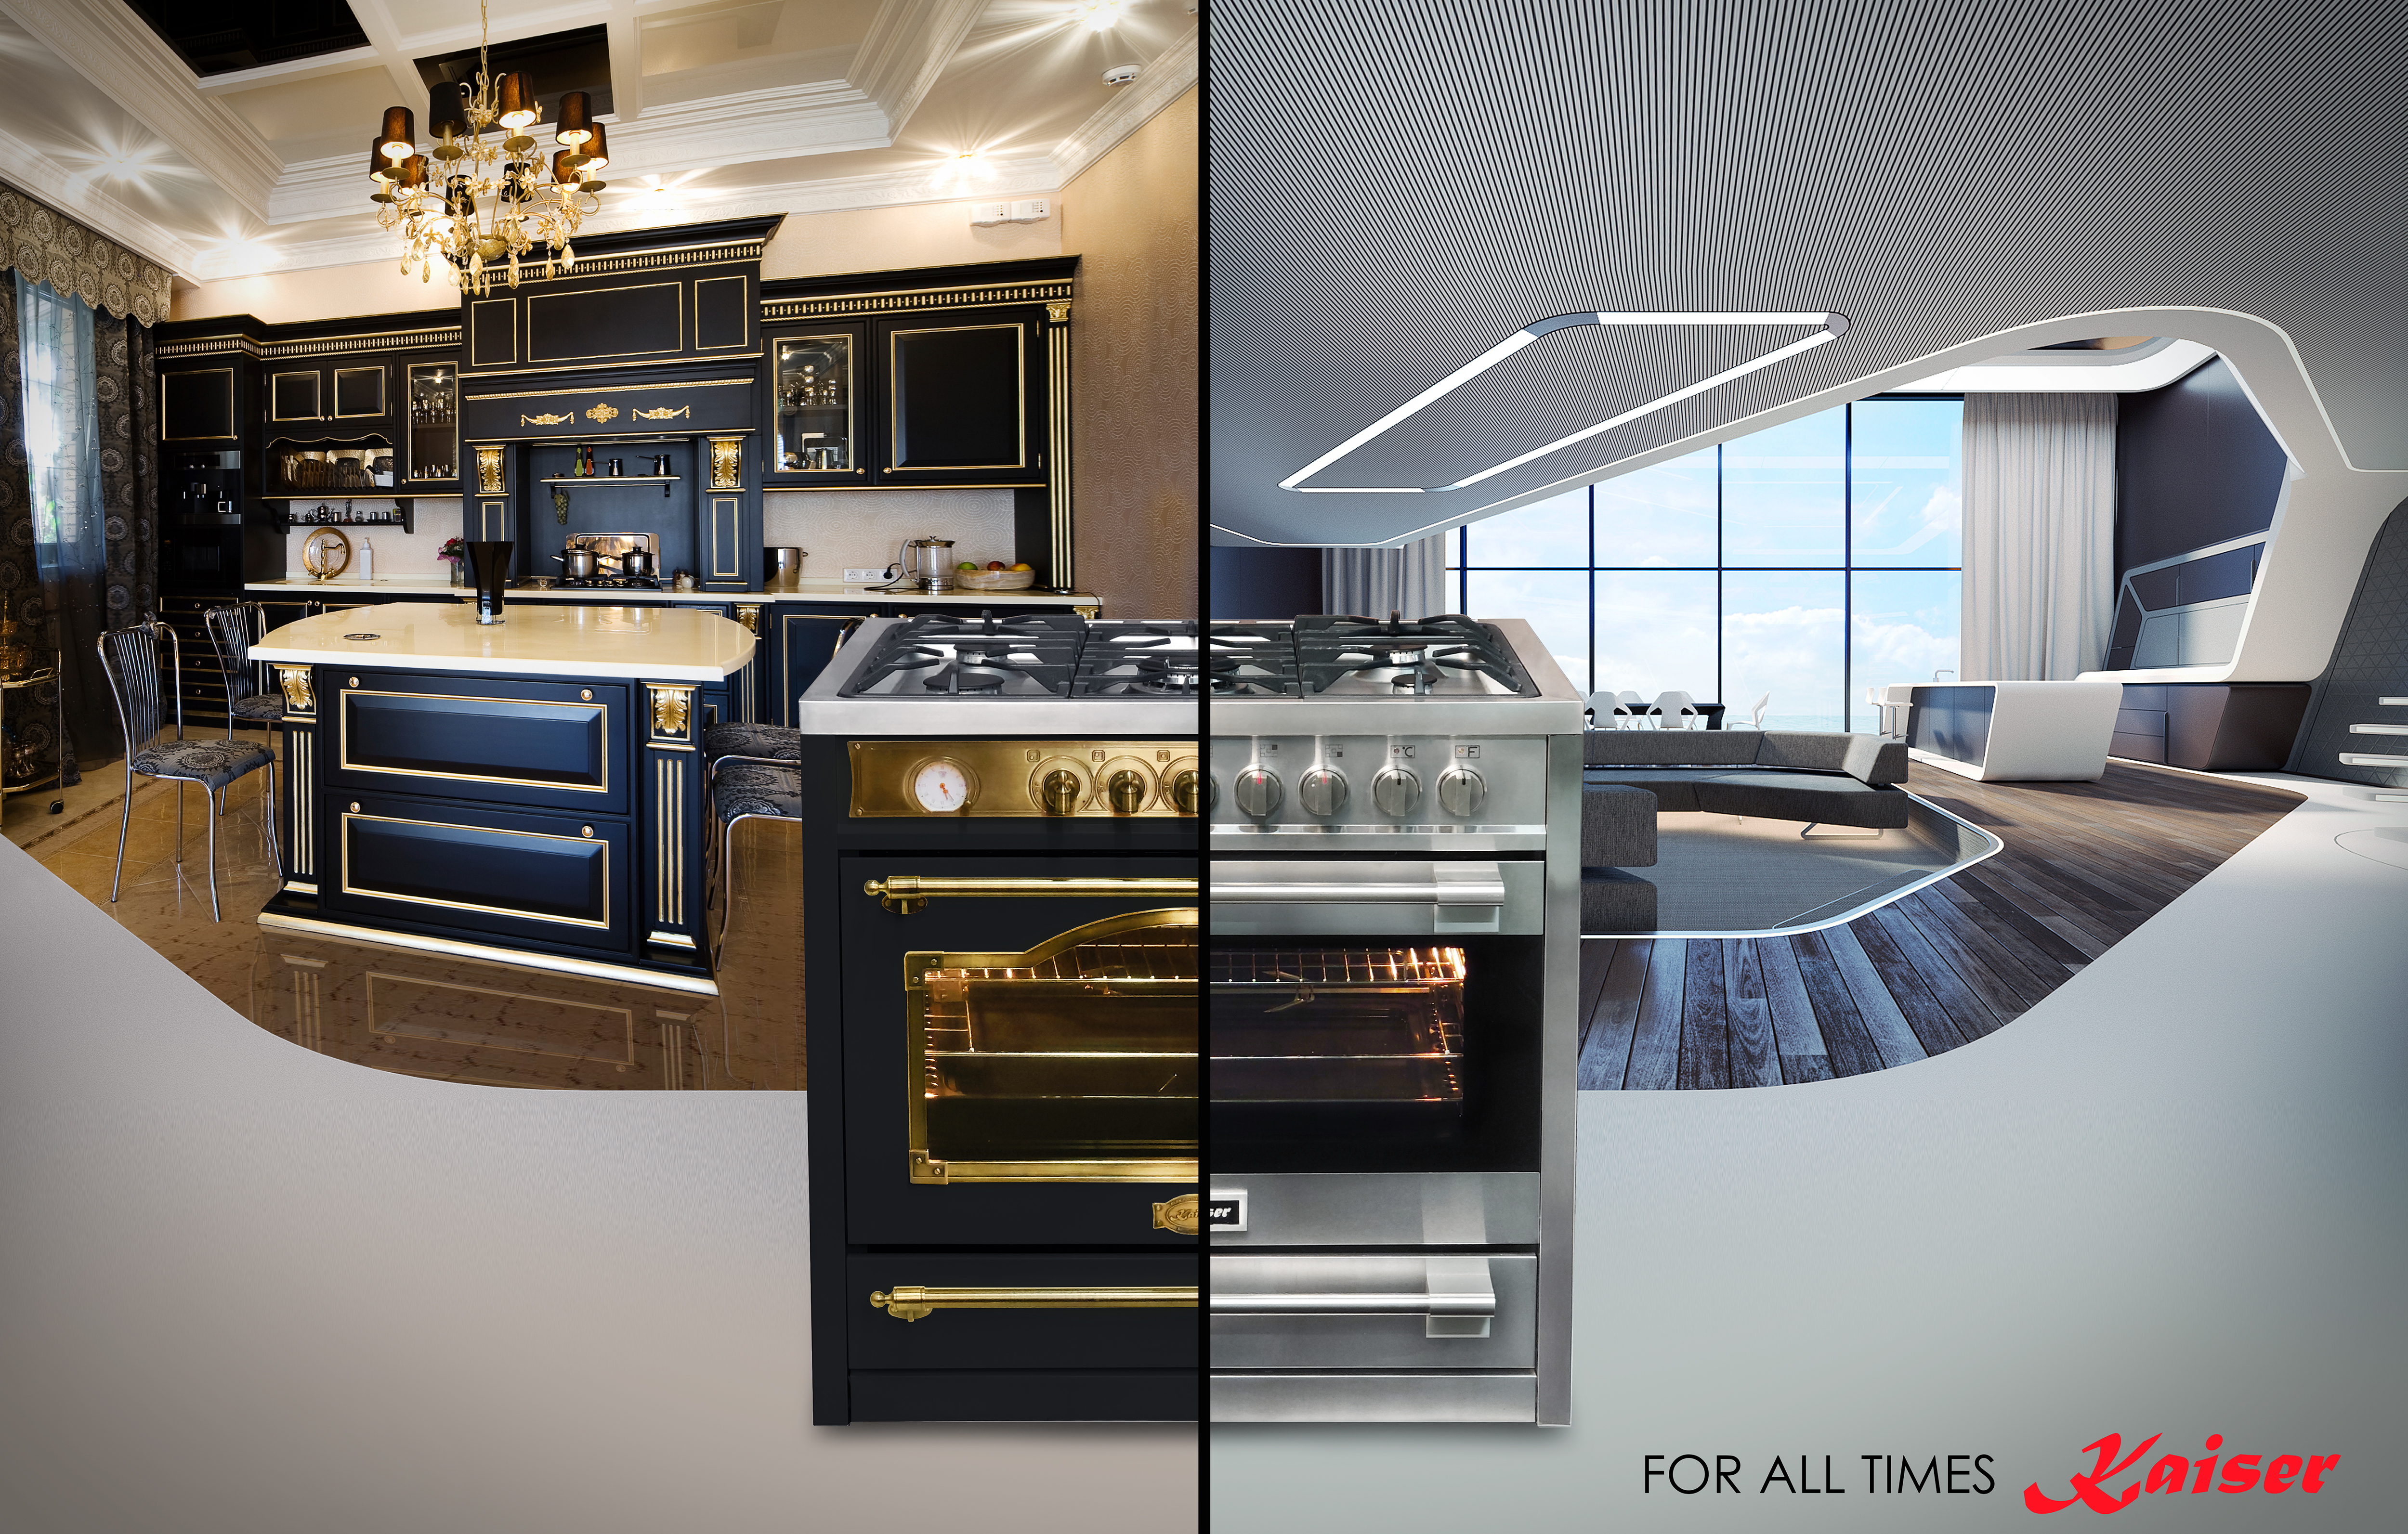 Innovative range of Kaiser appliances now available online - plus amazing perks